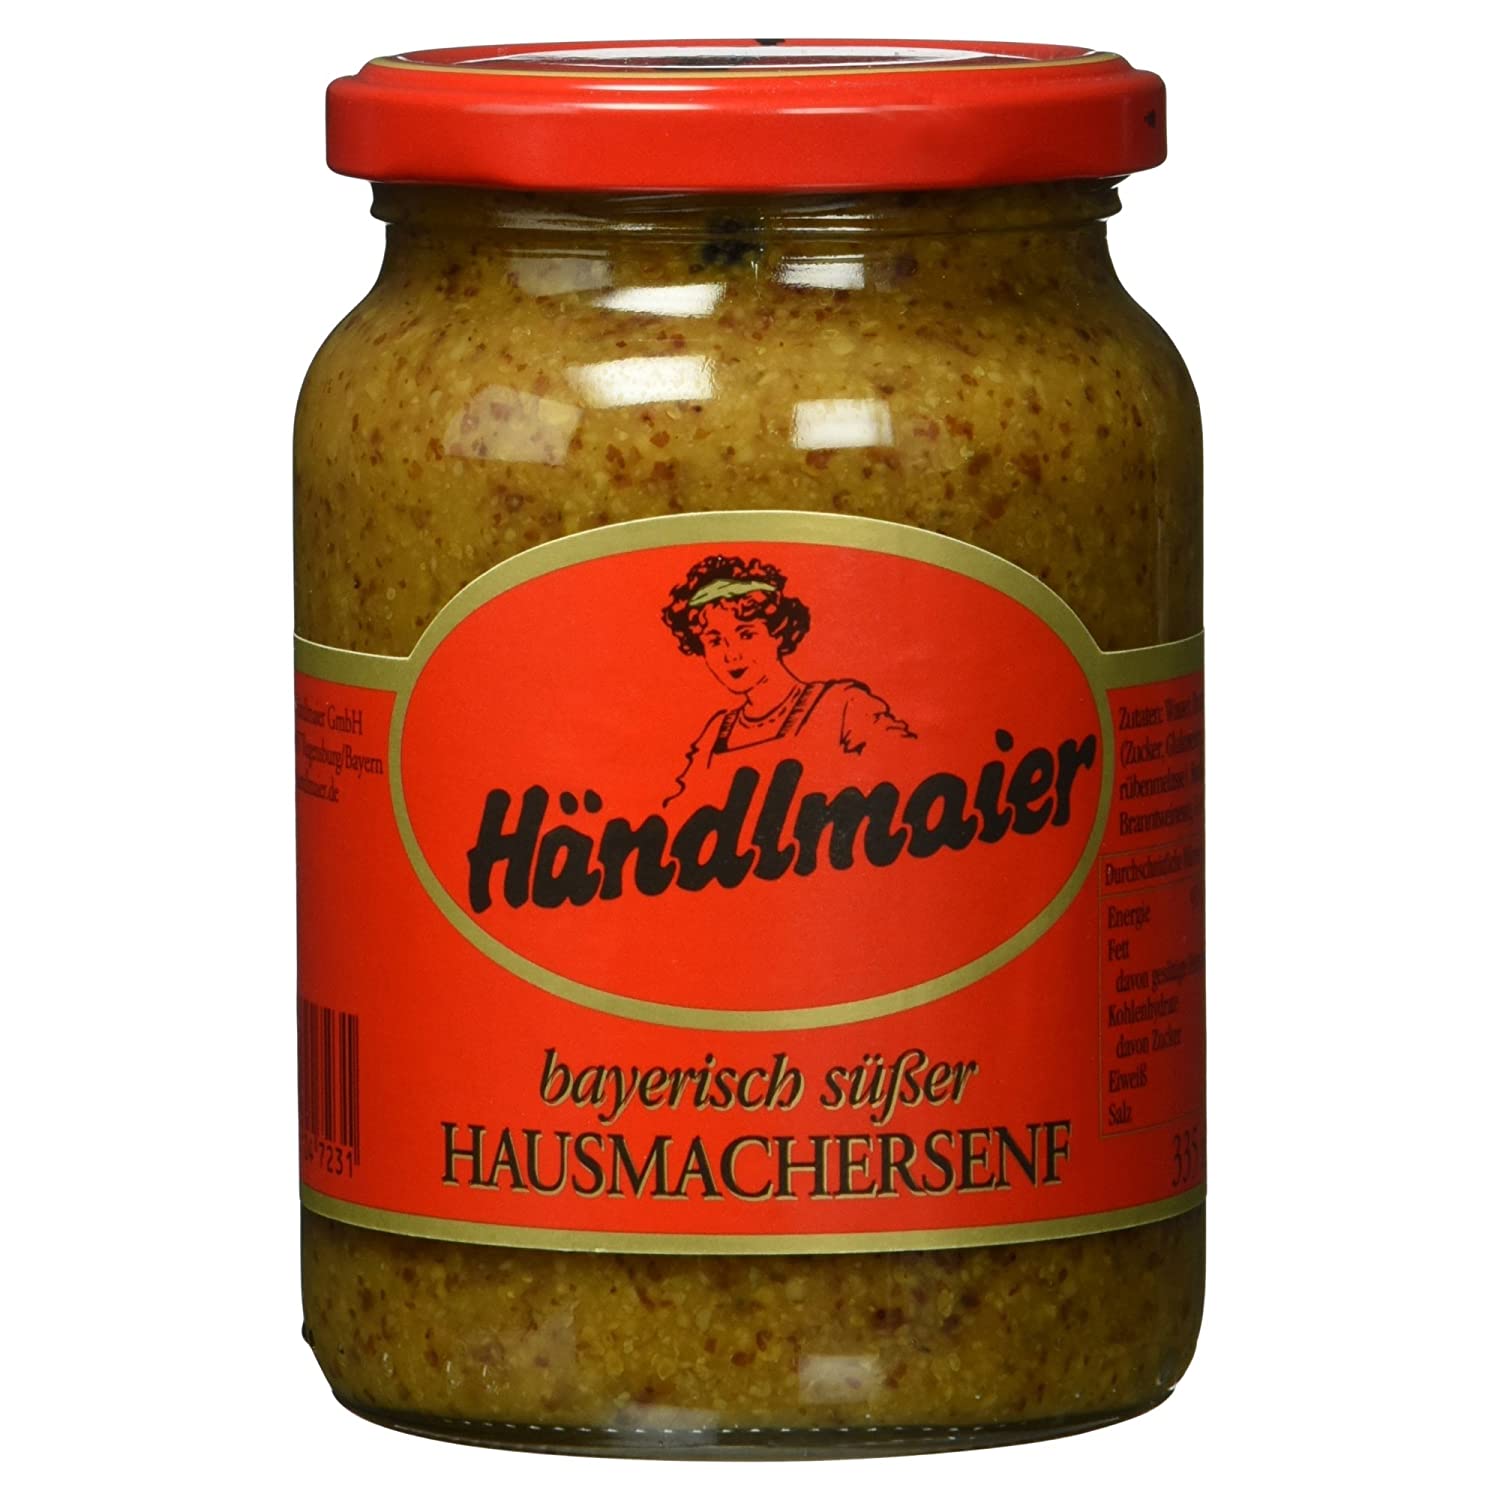 Haendlmaier suesser Hausmachersenf sweet mustard 335ml from Germany